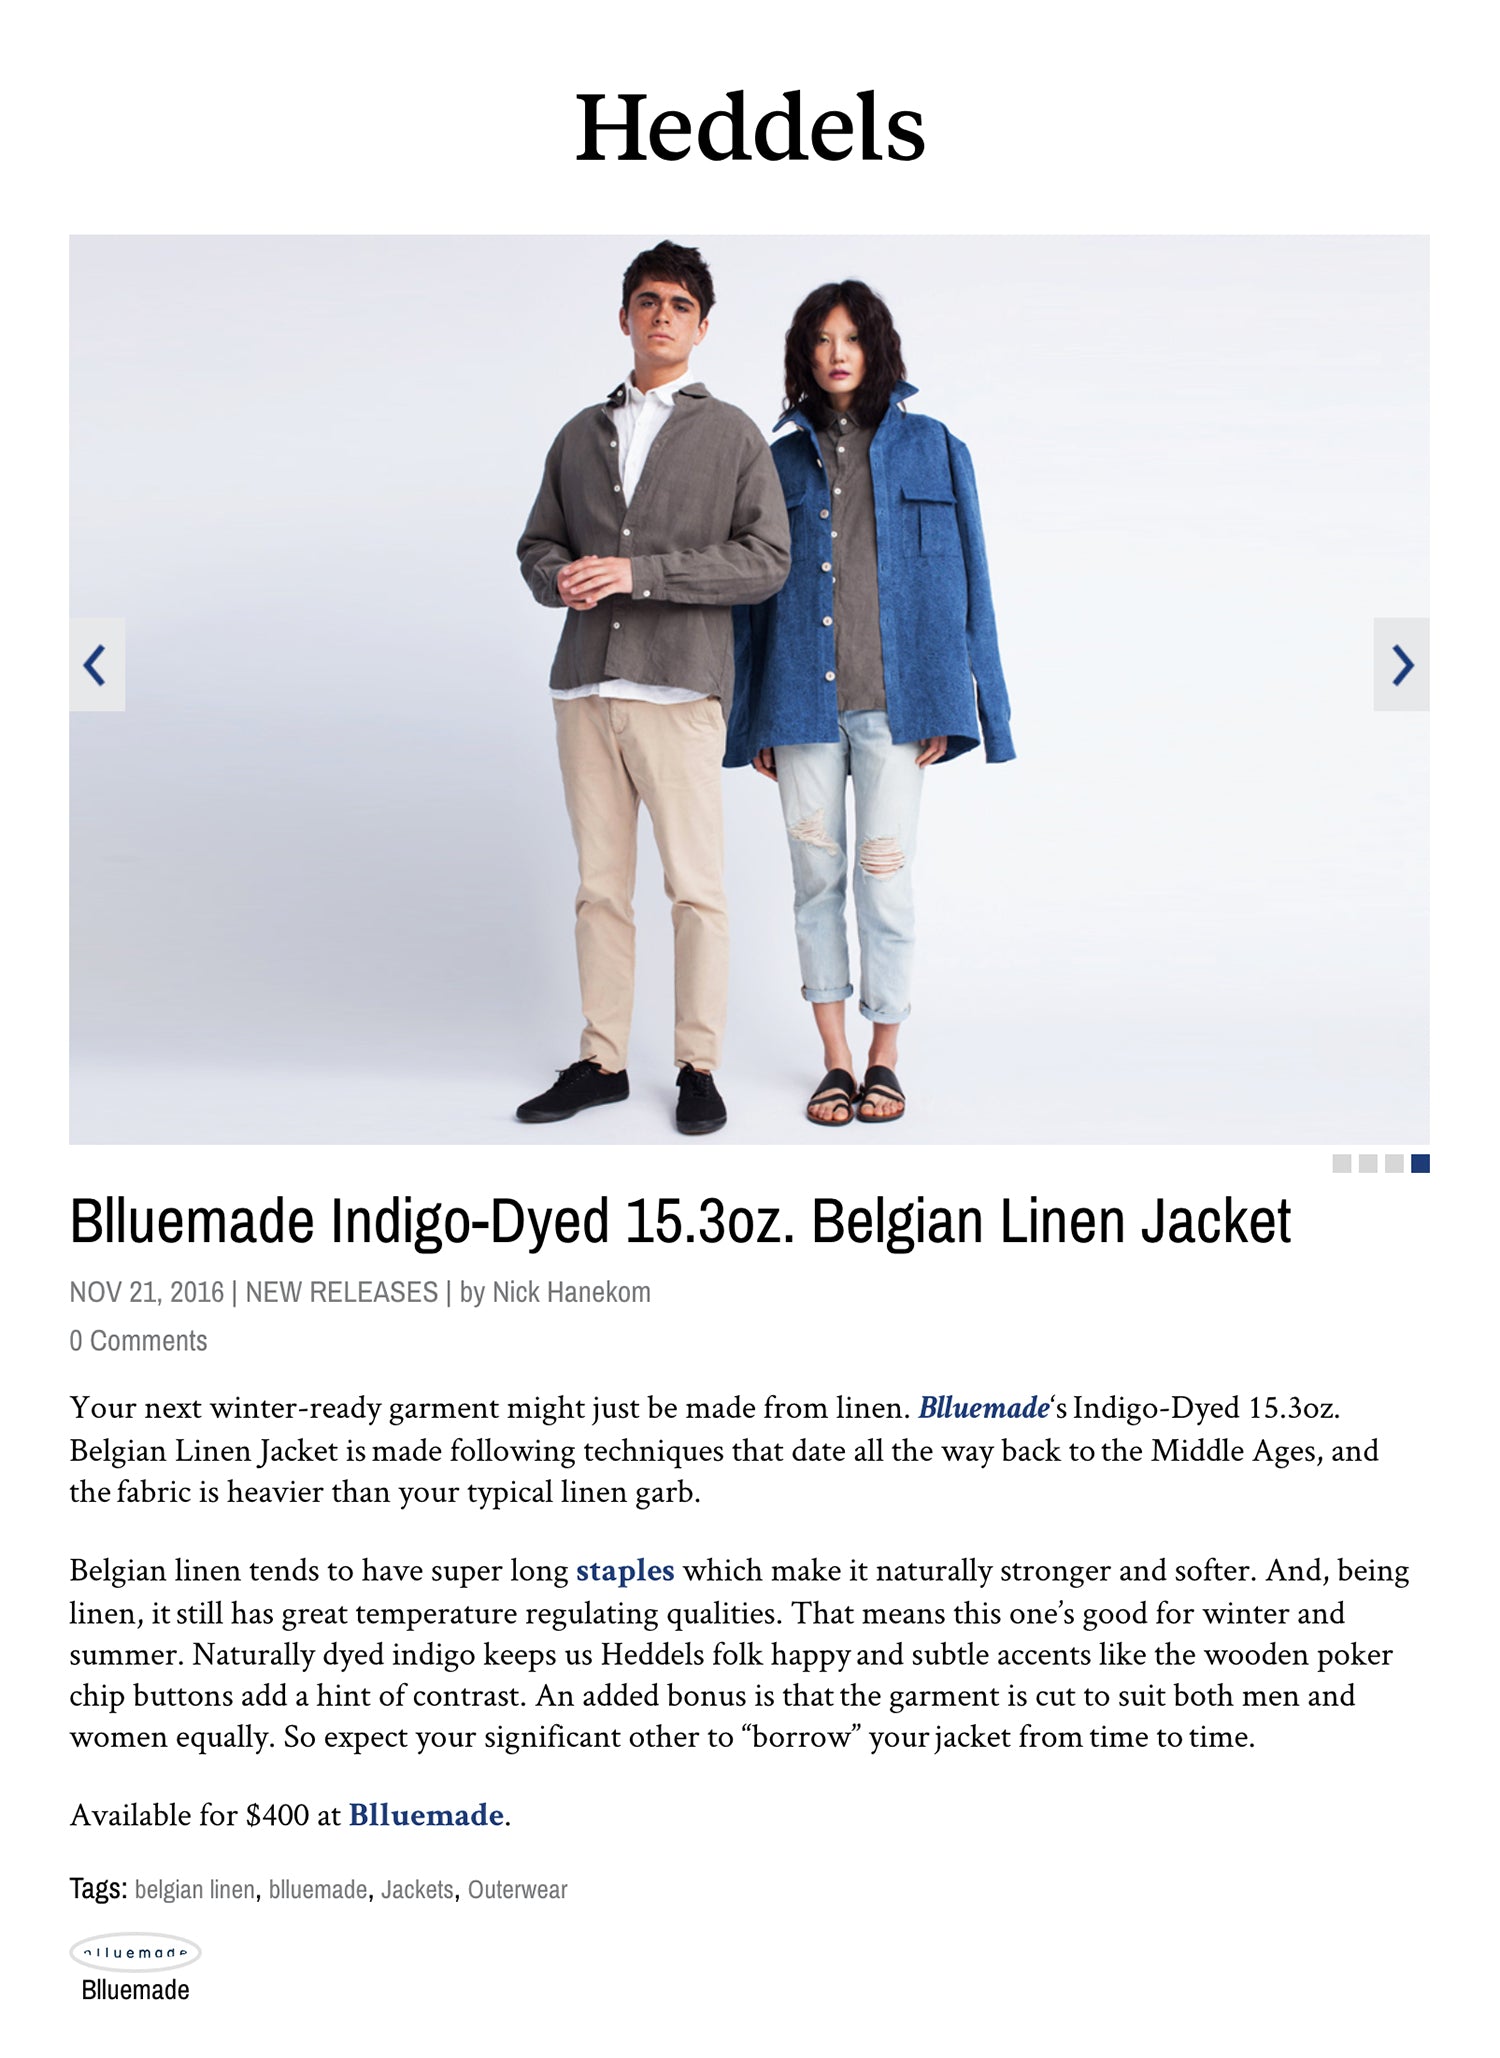 Heddels Article Blluemade Indigo-Dyed Belgian Linen Jacket